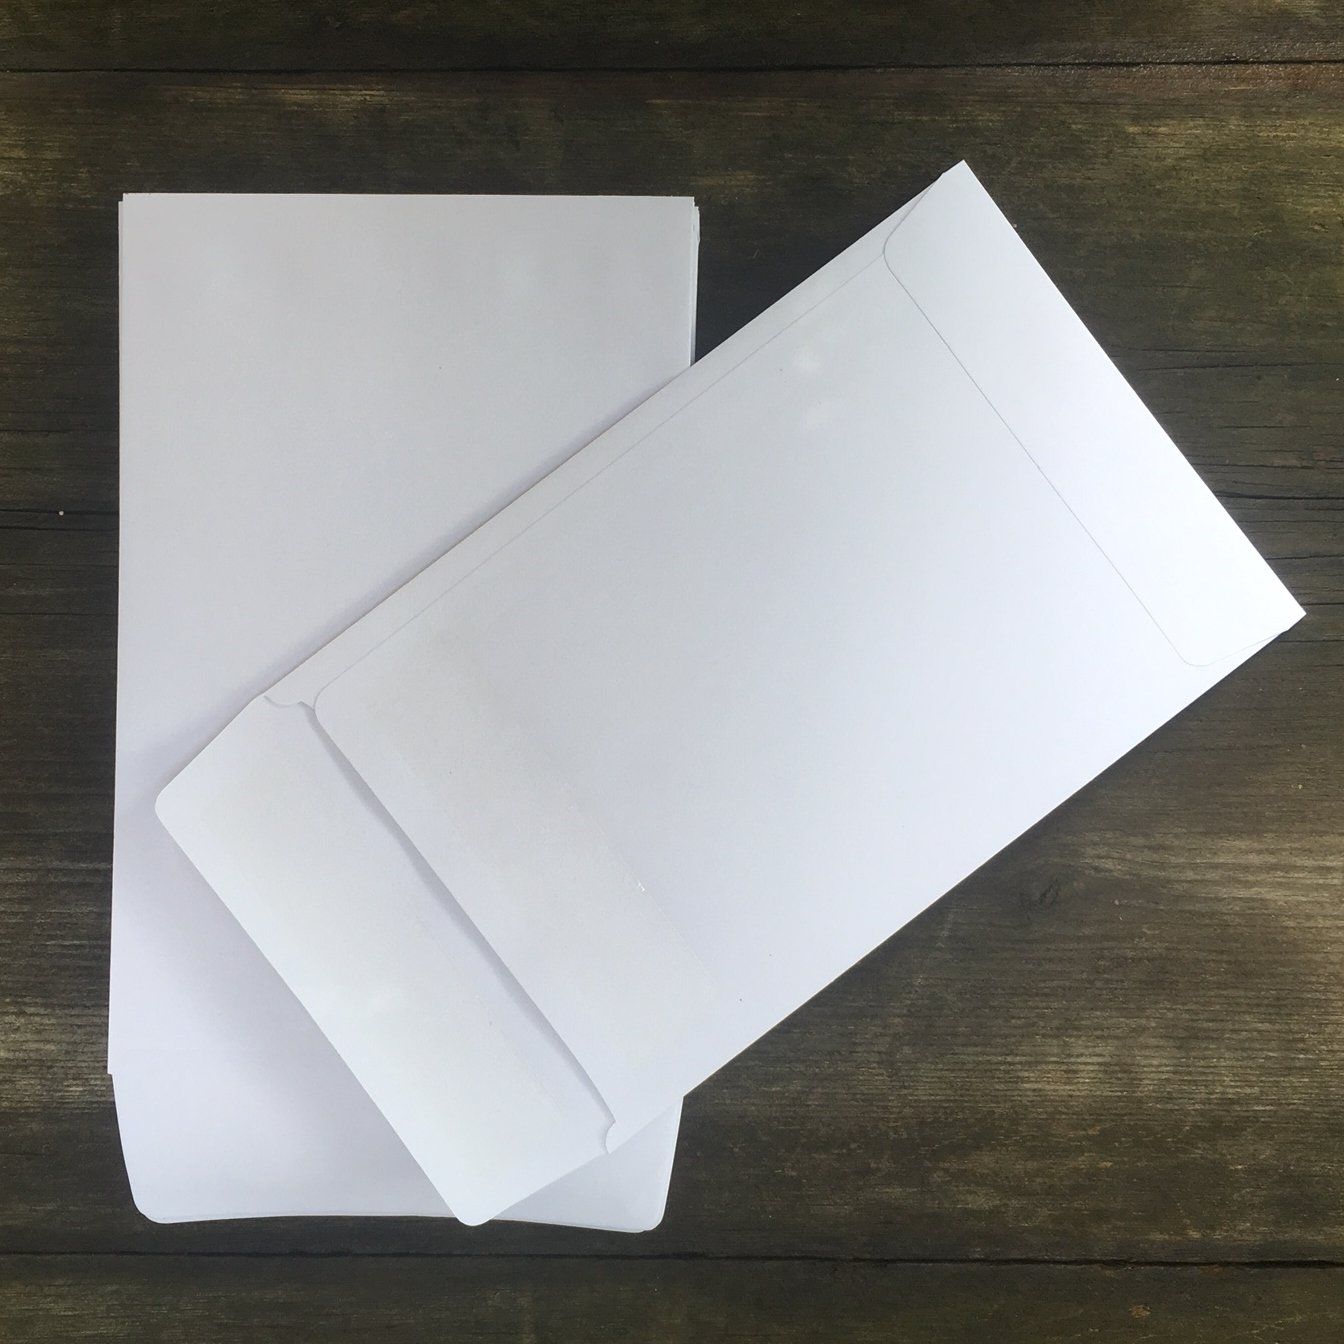 seed saving envelopes — The Green House